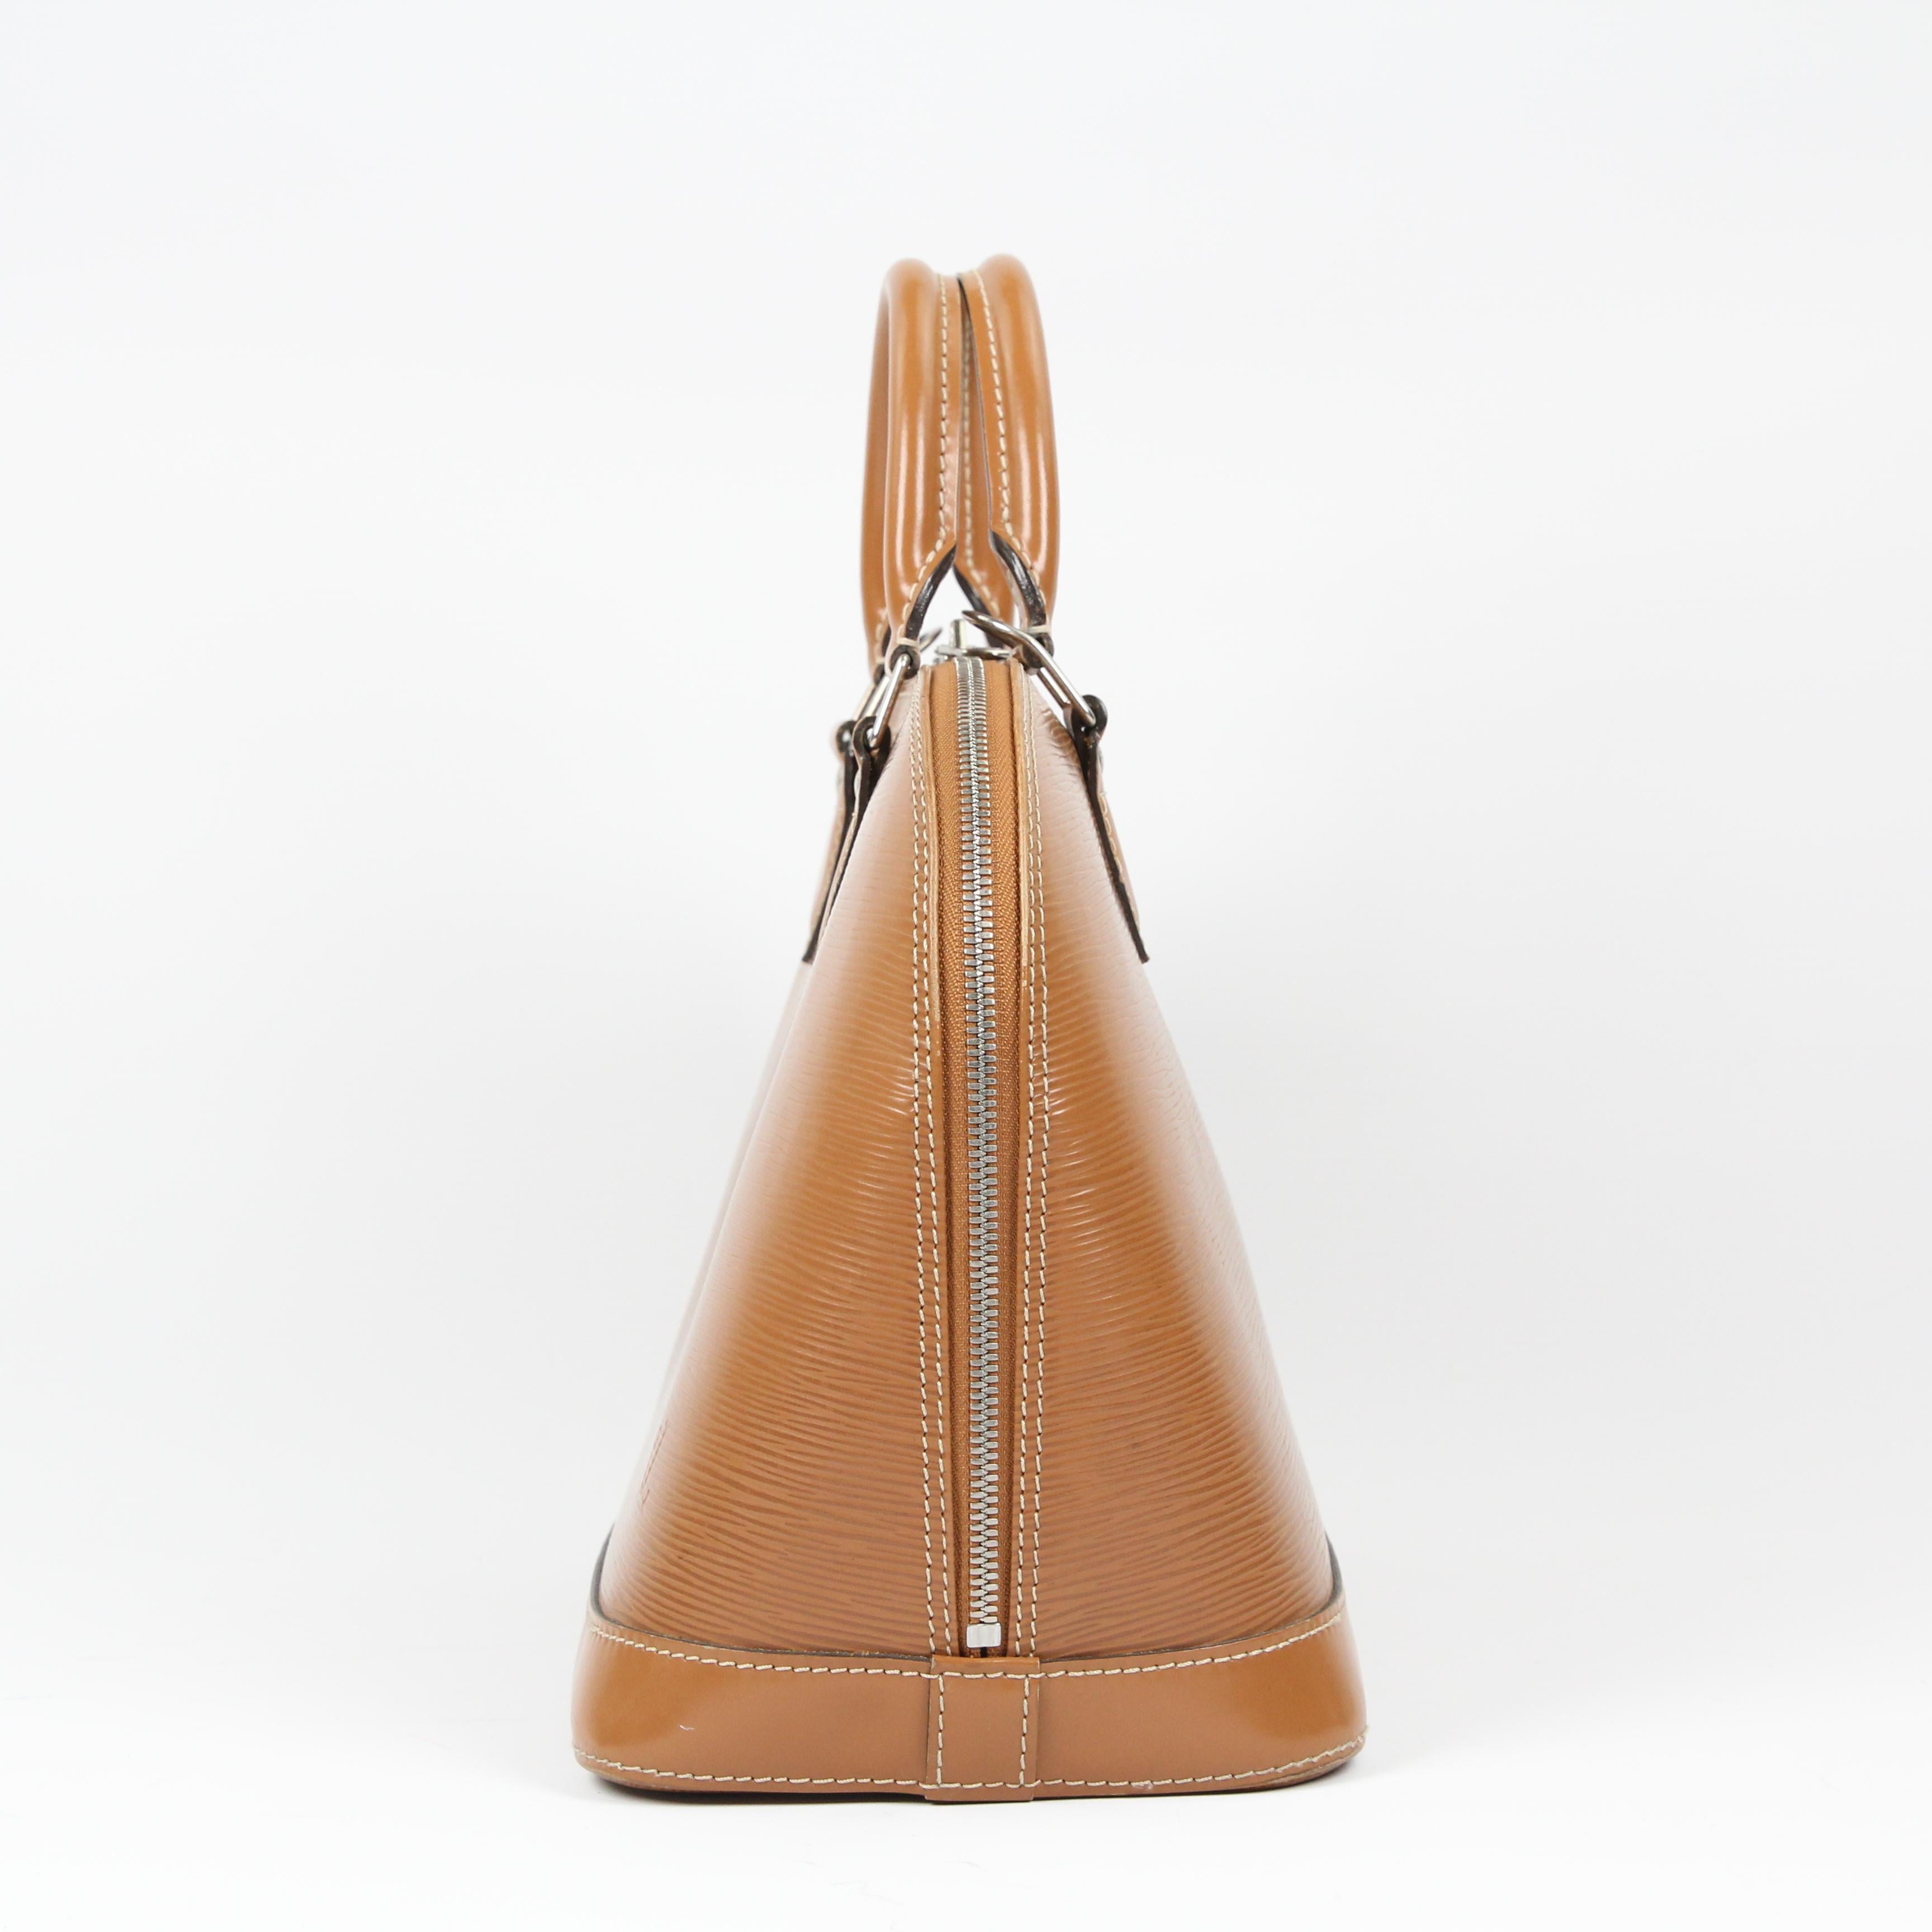 Louis Vuitton Alma leather handbag For Sale 3